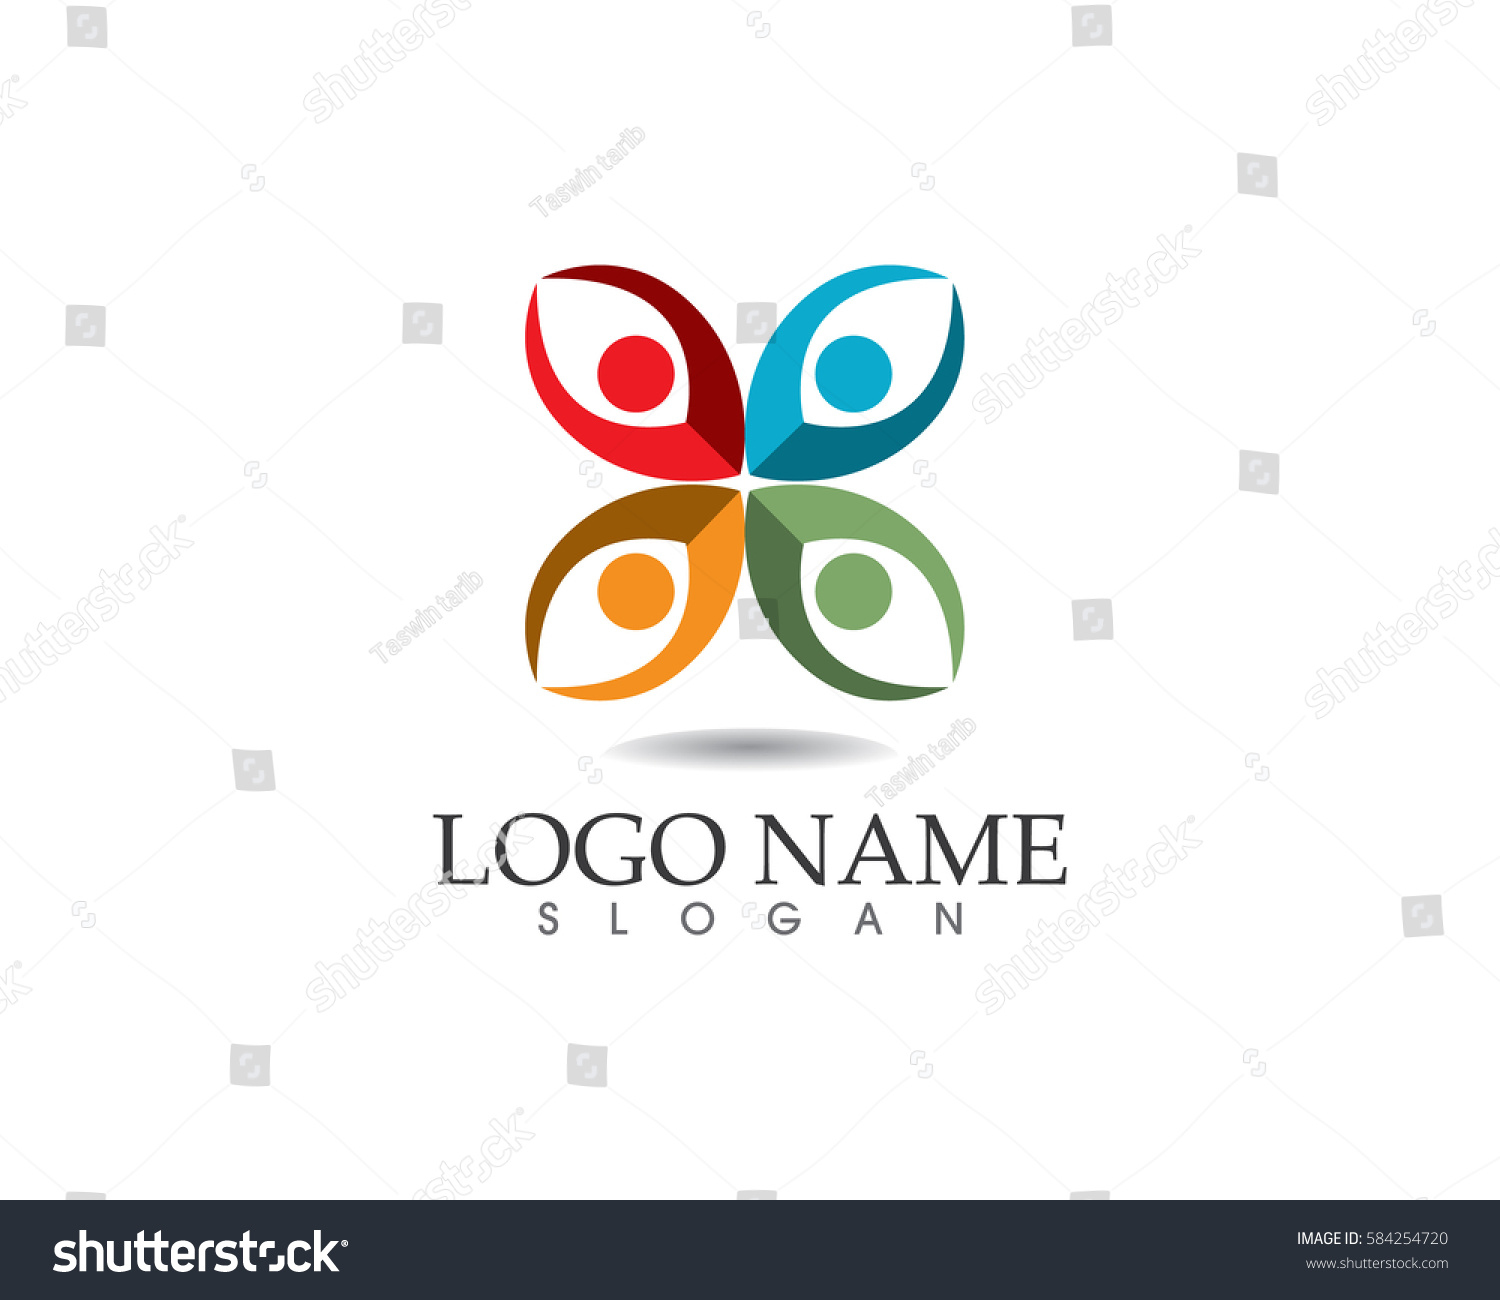 Edit Vectors Free Online Logo Template Shutterstock Editor